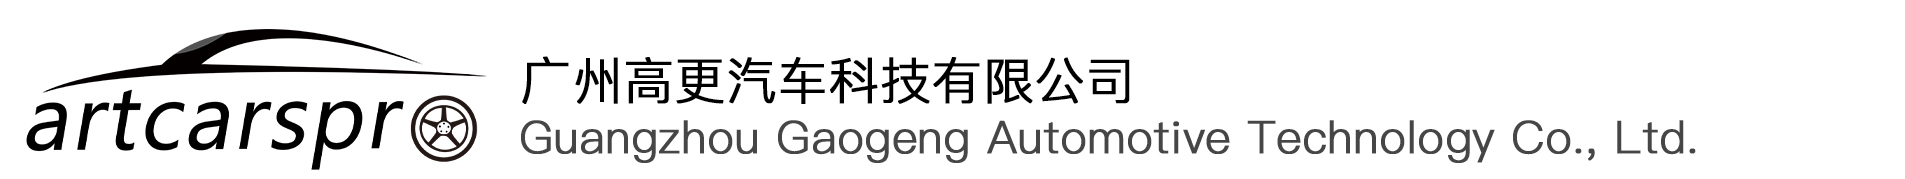 Guangzhou Gaogeng Automotive Technology Co., Ltd.